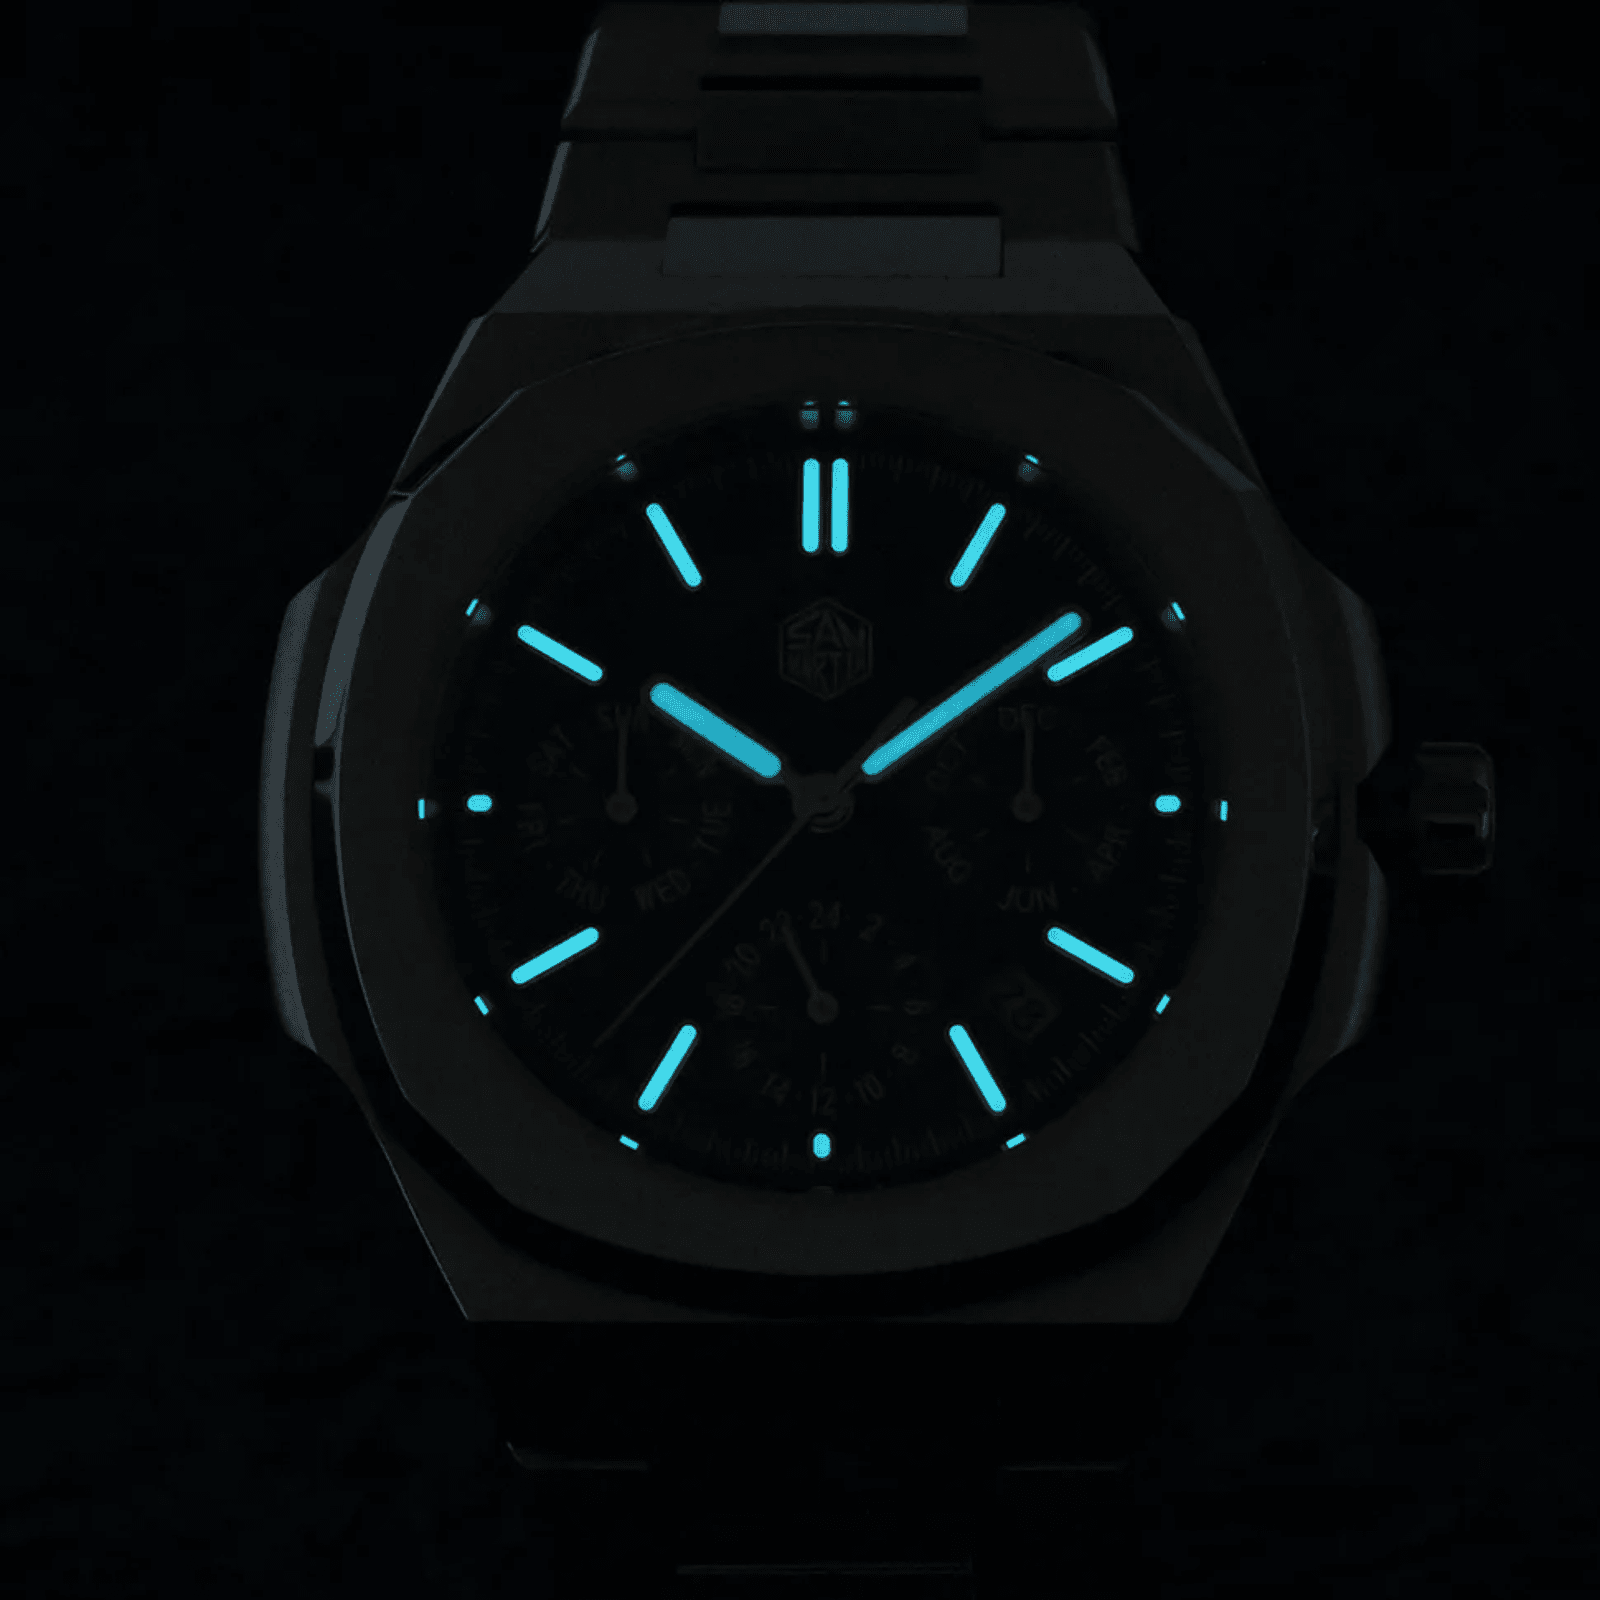 San Martin Multi-function Mens Luxury Watch 43mm Watch SN075GB - Light Blue san martin watches india online